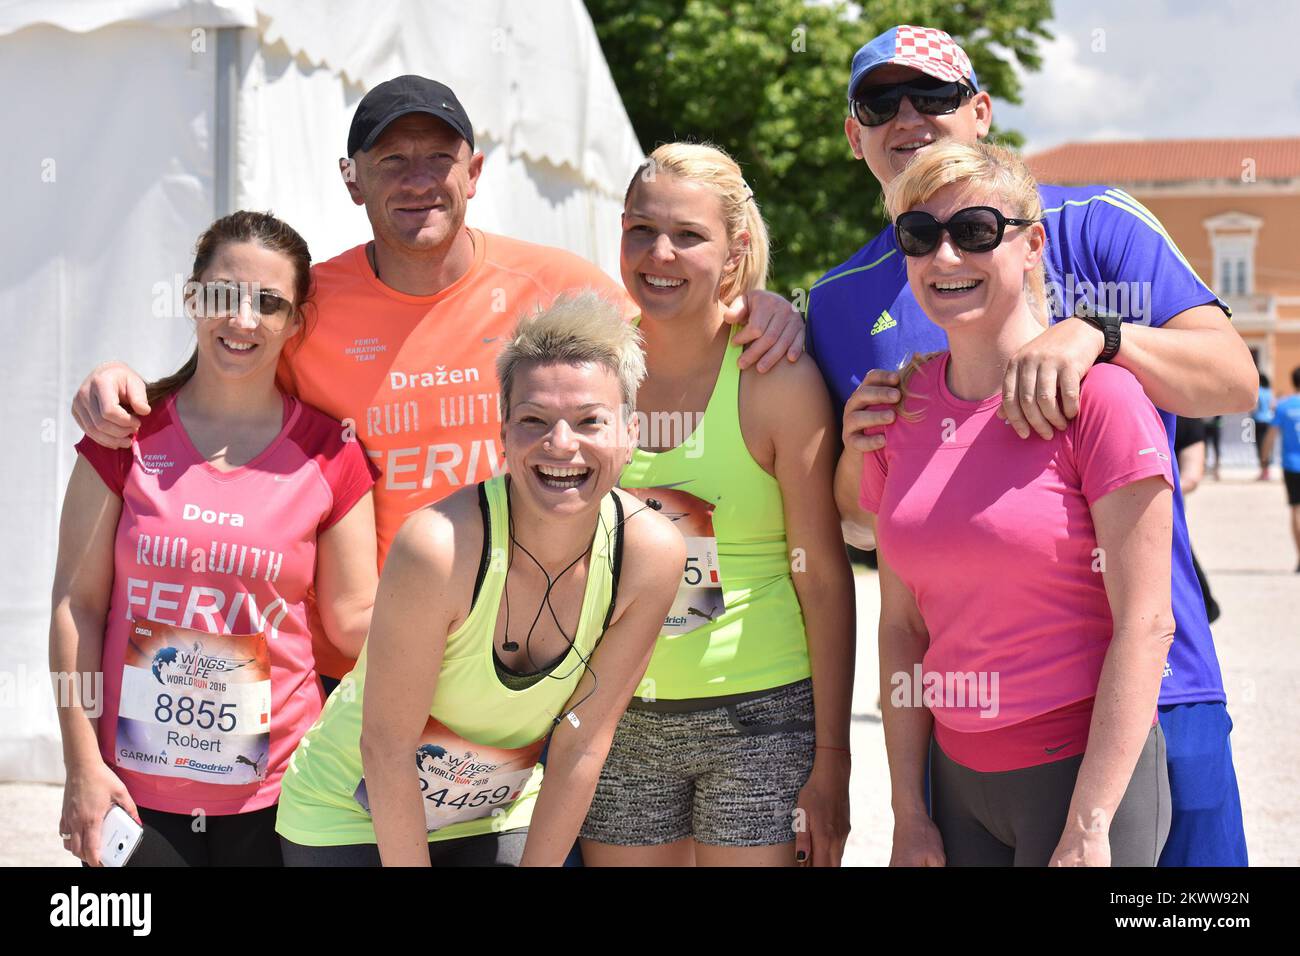 08.05.2016., Zadar, Croatia - Several thousand people participate in worldwide charity run Wings For Life World Run. Stock Photo